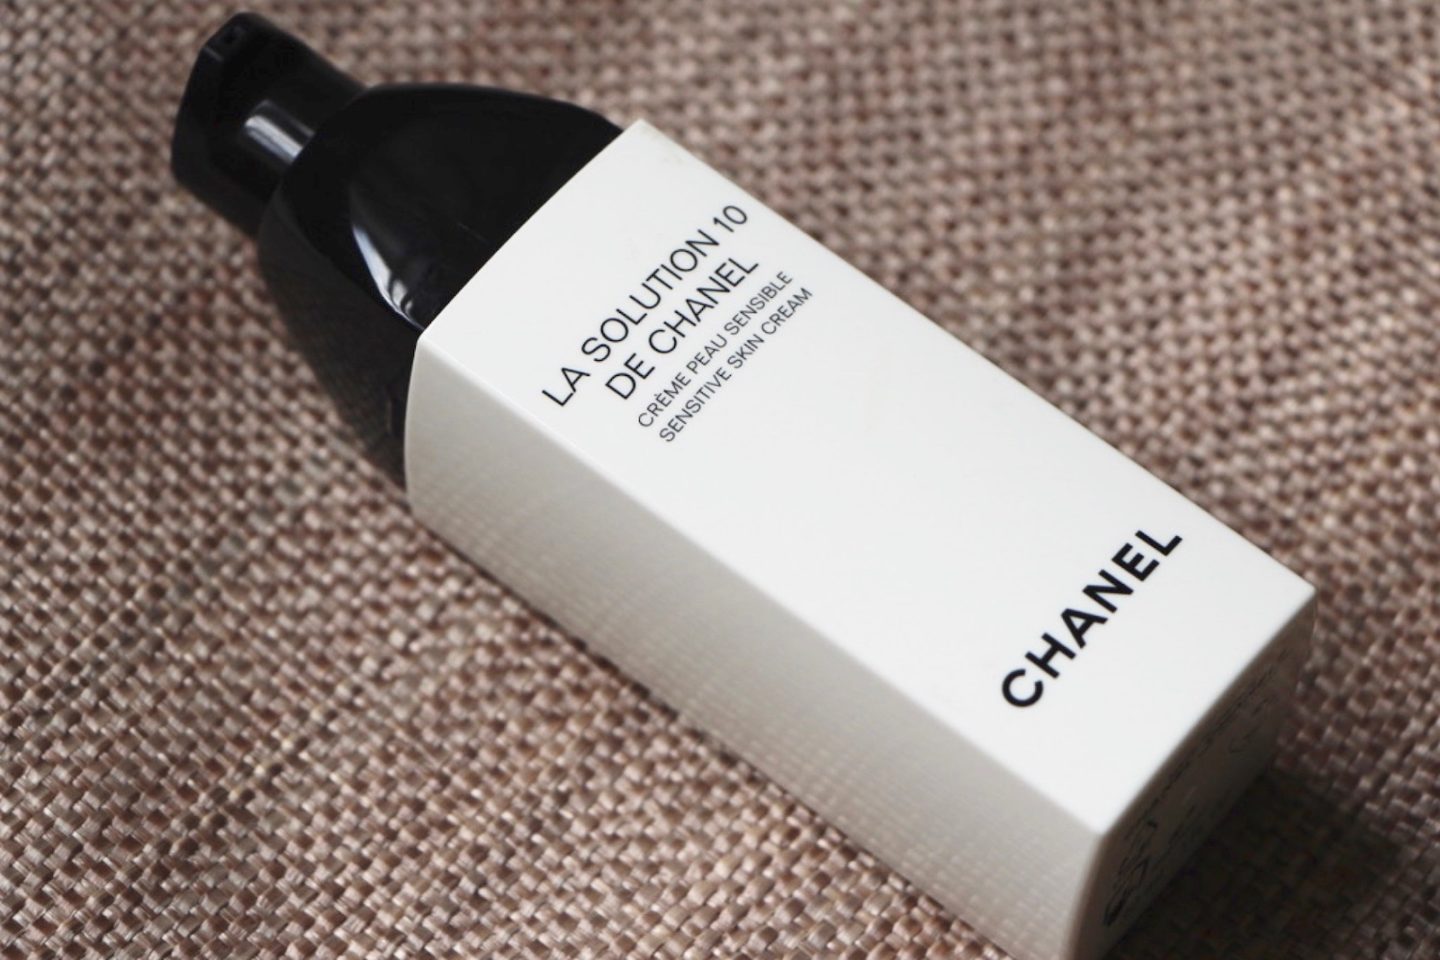 Skincare Review: La Solution 10 De Chanel - Ruth Crilly